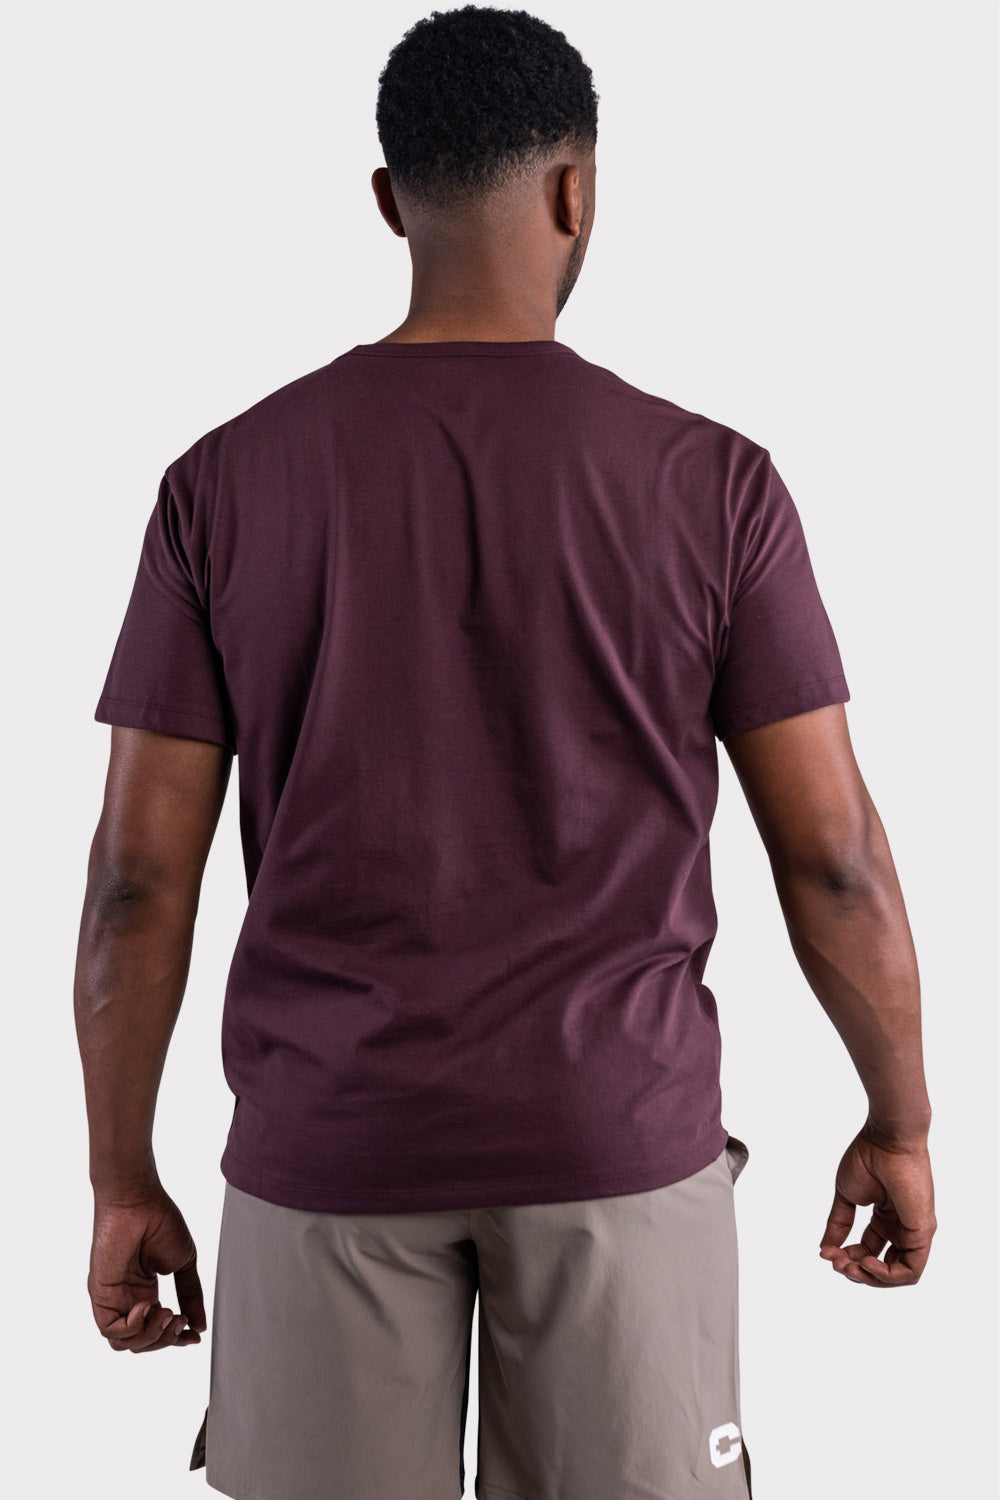 CLN Rick T-Shirt - Vino Oscuro  